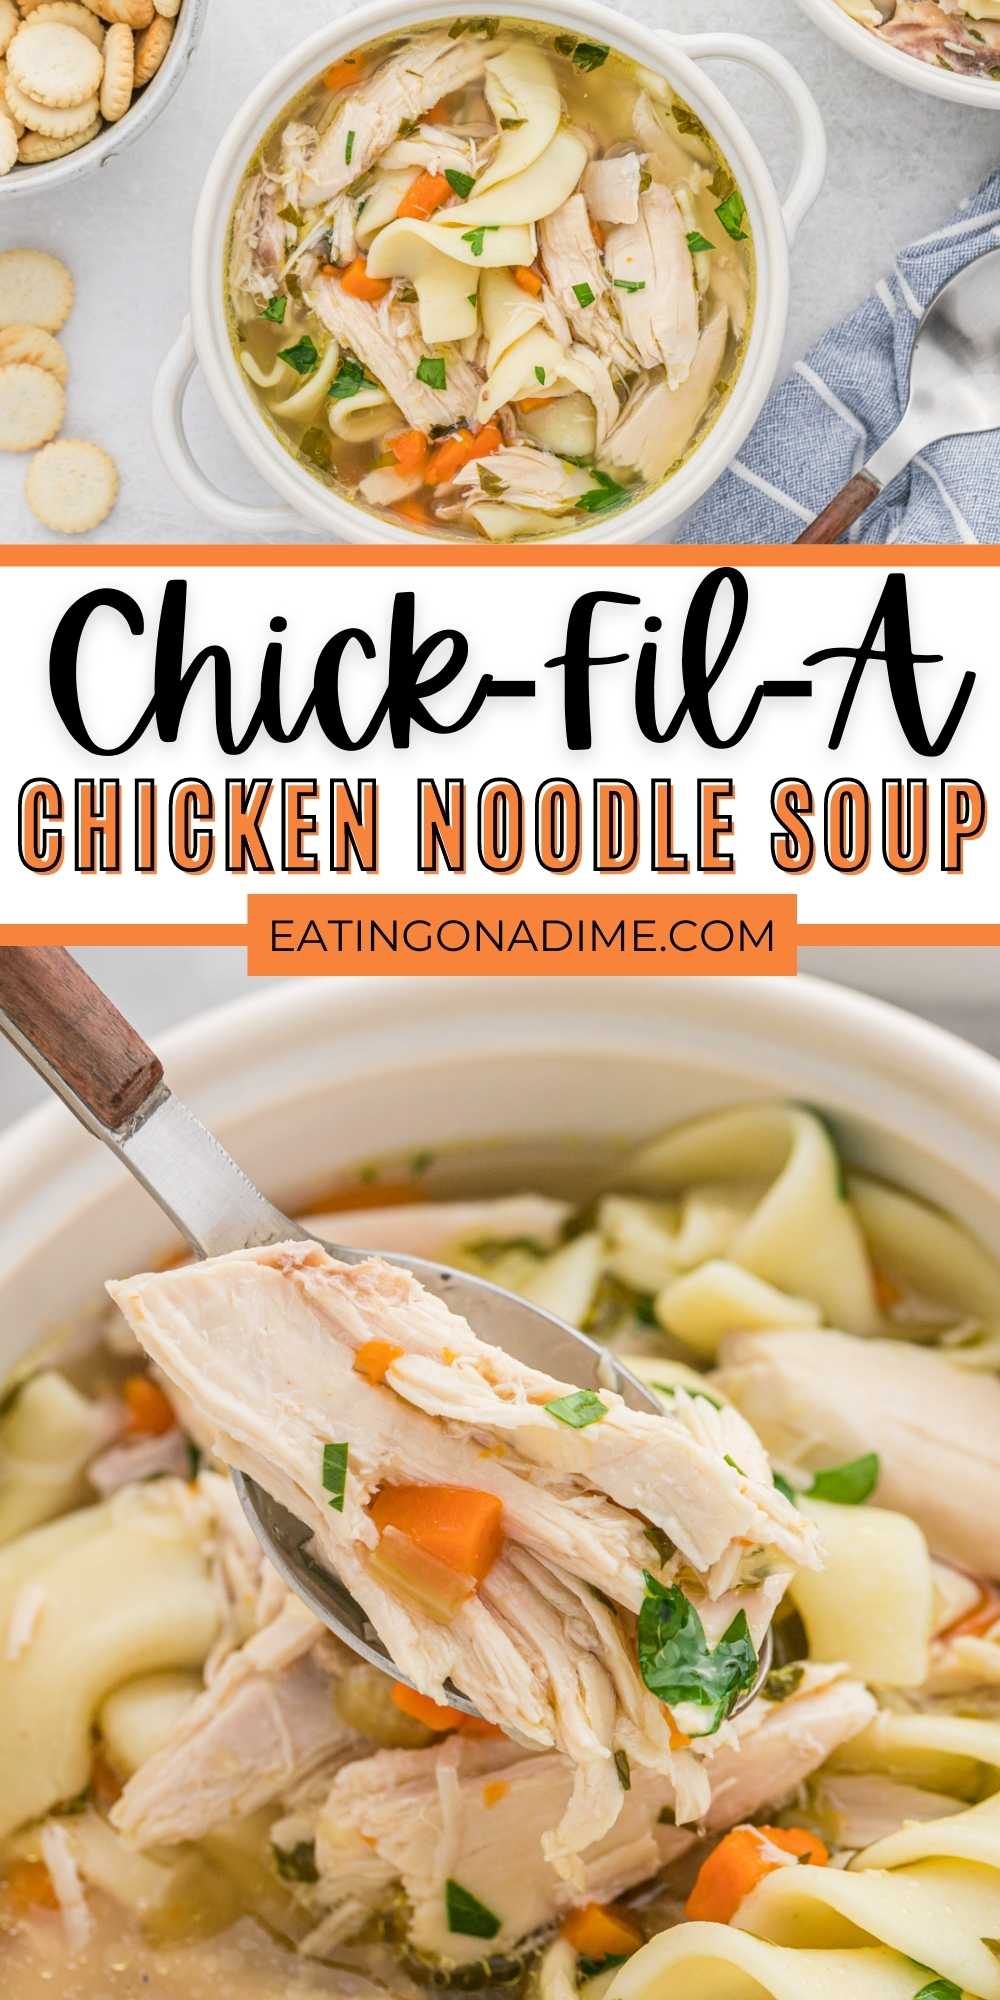 https://www.eatingonadime.com/wp-content/uploads/2022/08/Chick-Fil-A-Chicken-Noodle-Soup-3.jpg